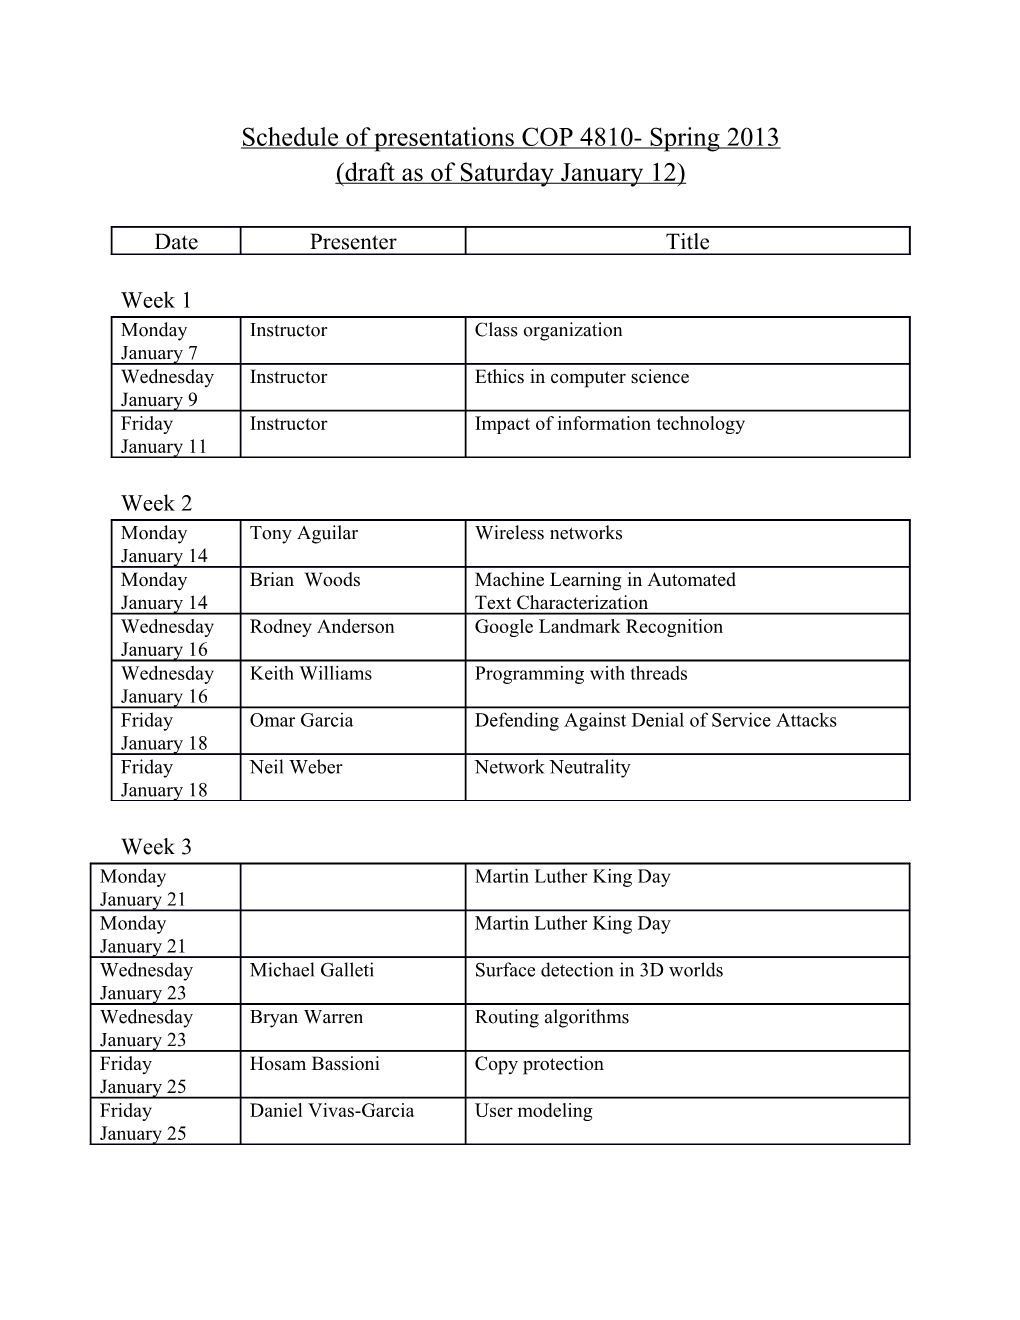 Schedule of Presentations COP 4810-Spring 2013